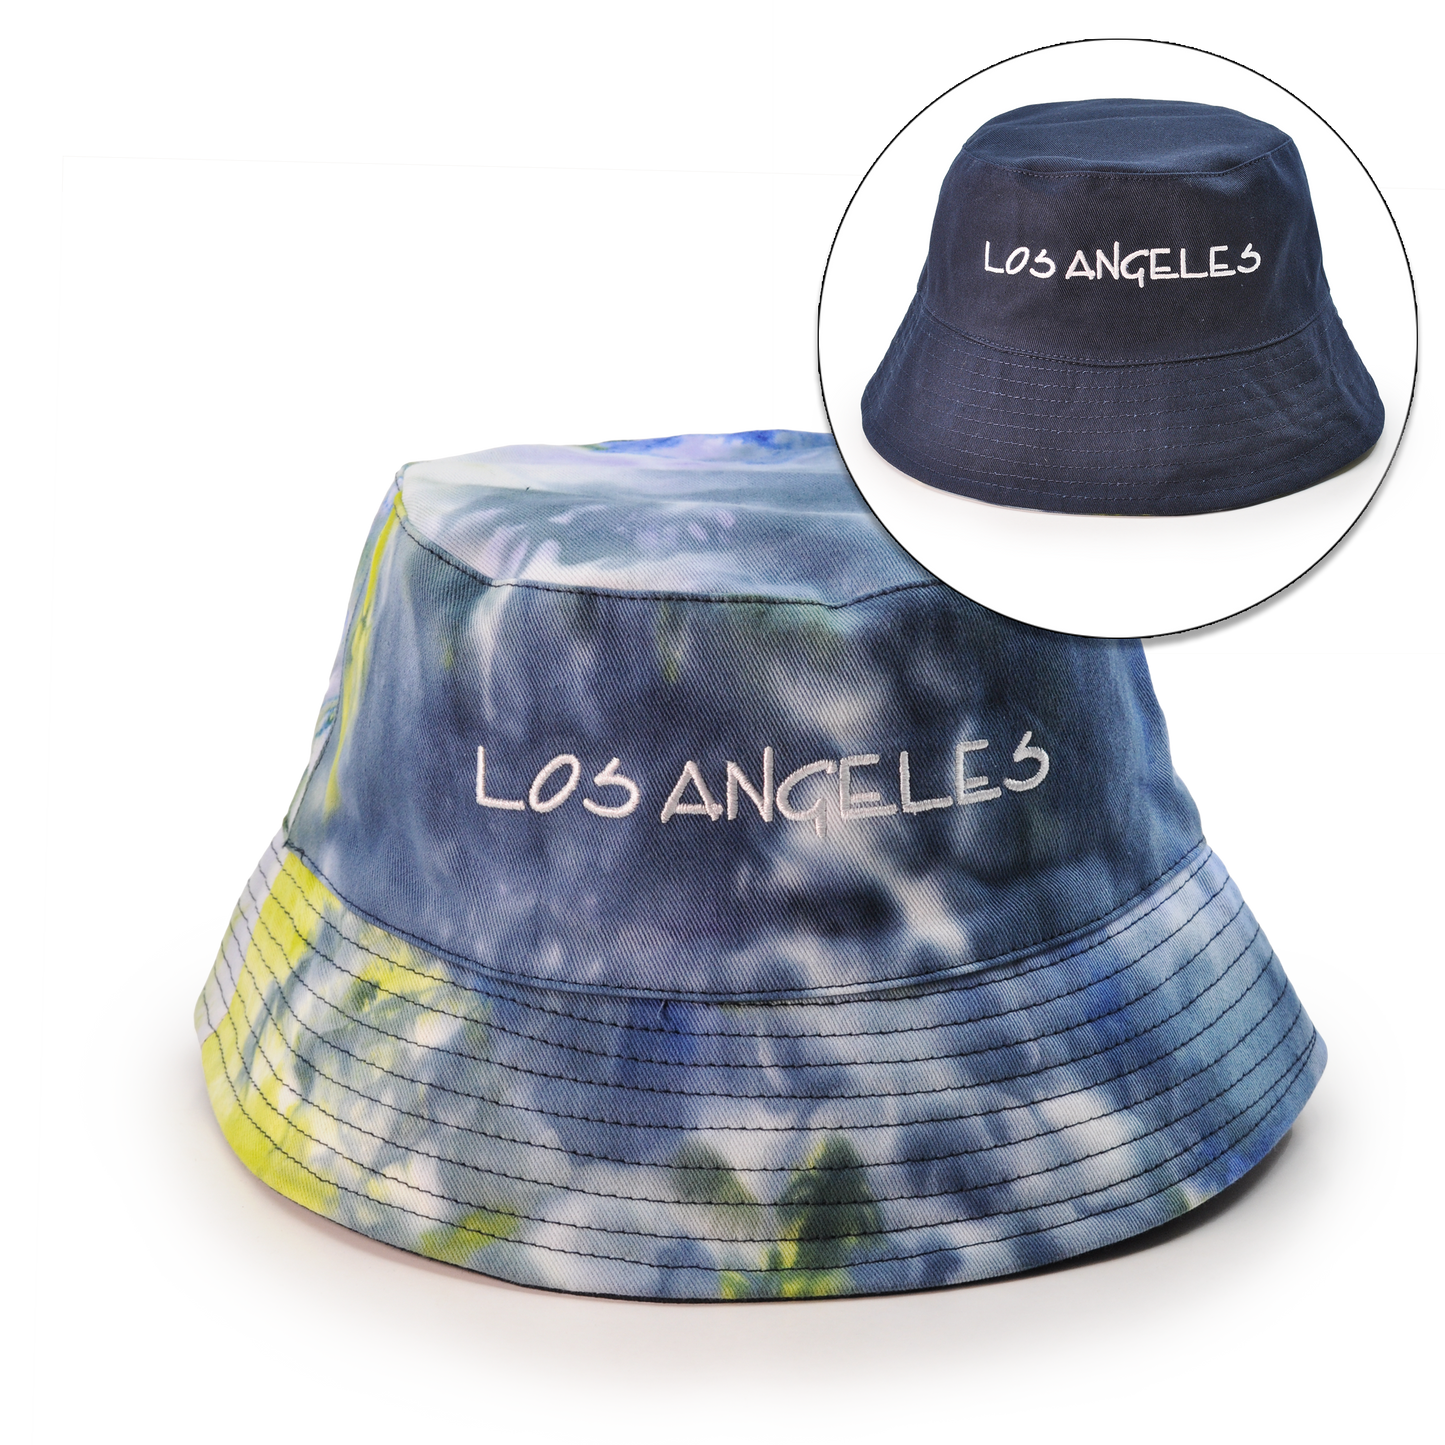 RIVER BEACH®-Reversible Los Angeles Unisex 100% Cotton Packable Summer Travel Tye Dye Bucket Beach Sun Hat Outdoor Cap